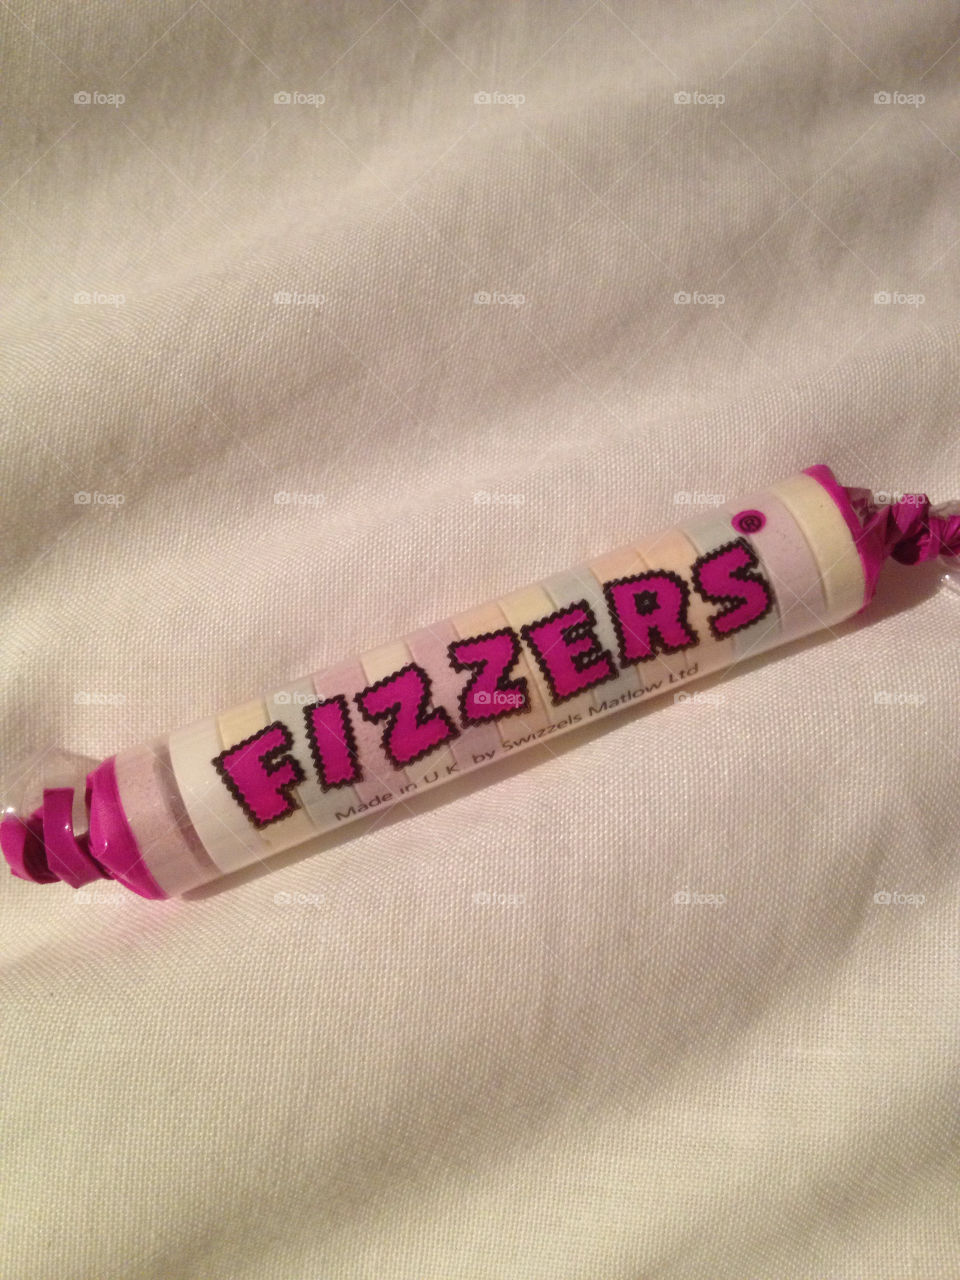 sweets uk fizzers swizzles by mrm